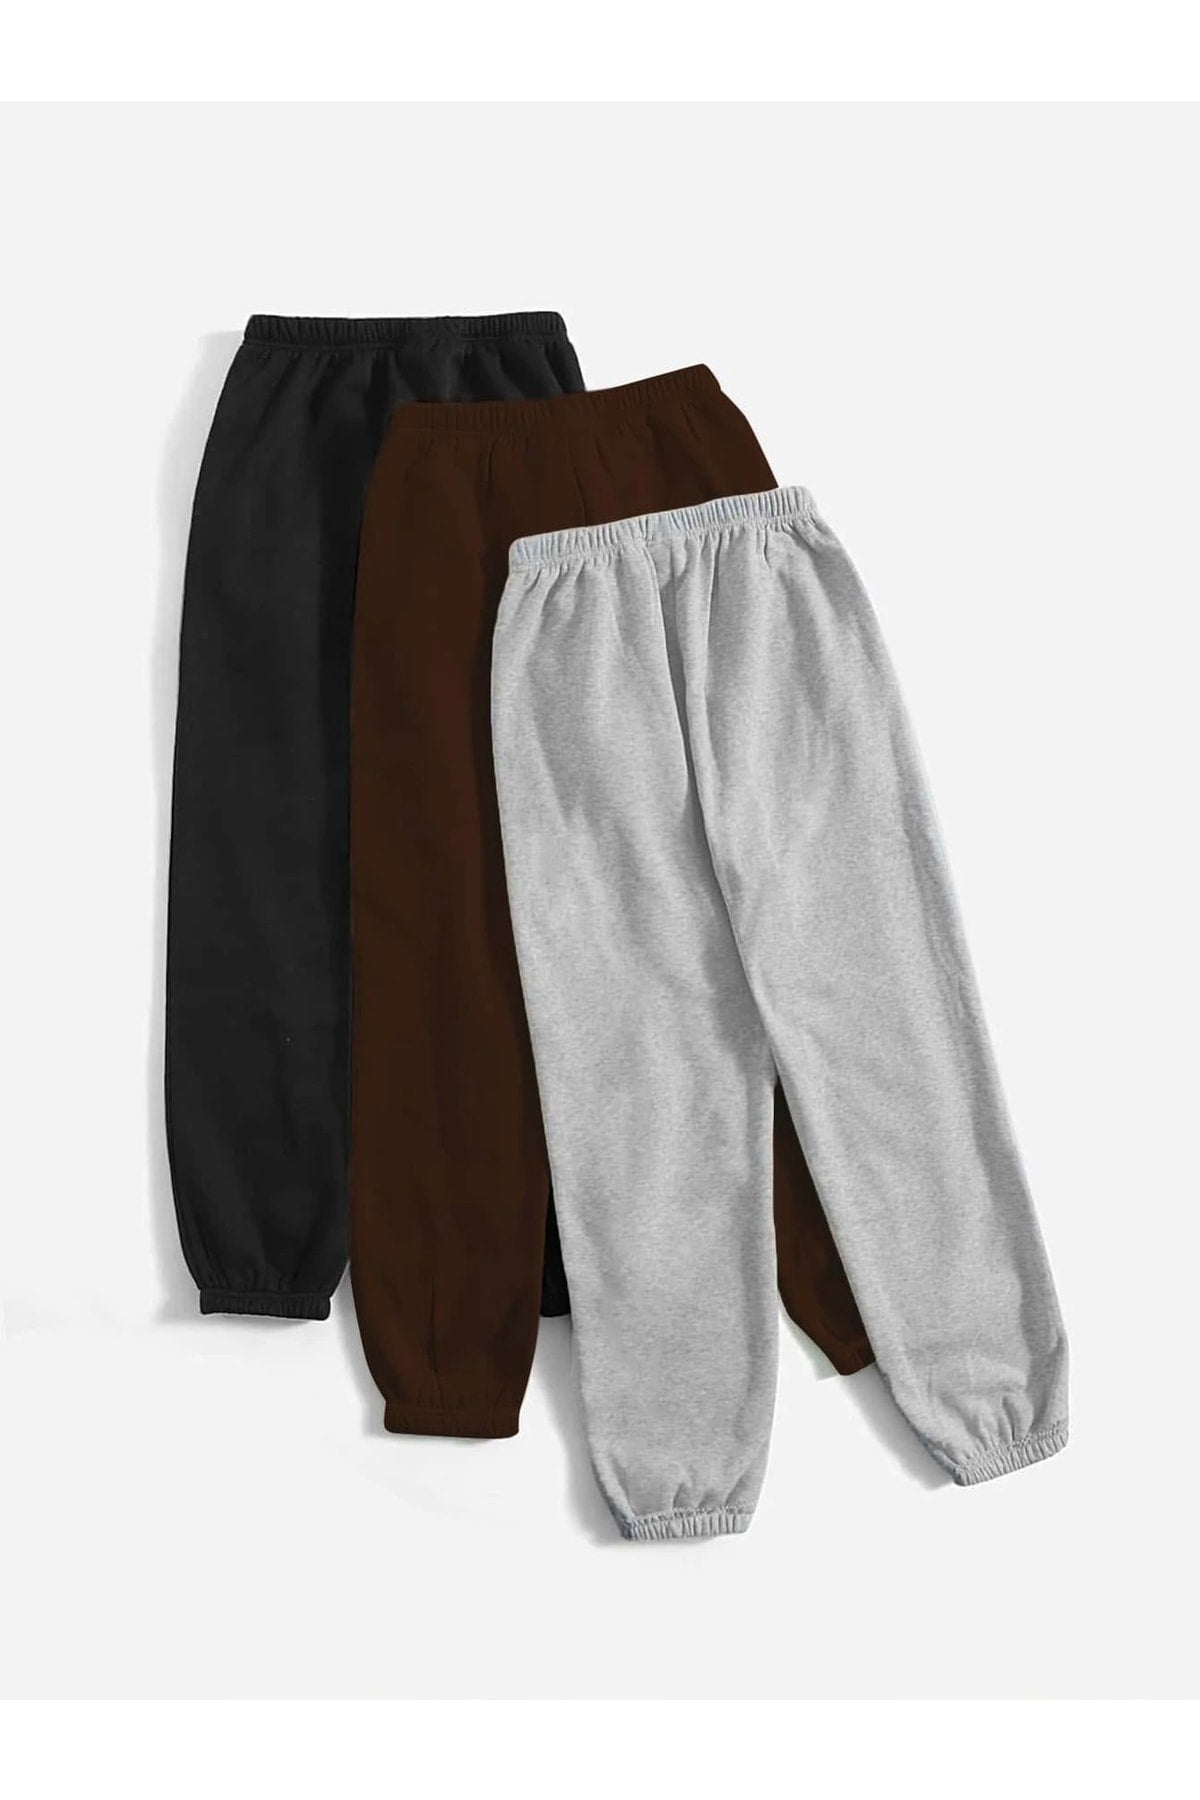 3-pack City Printed Jogger Sweatpants - Black, Gray And Brown, Elastic Legs, High Waist, Summer